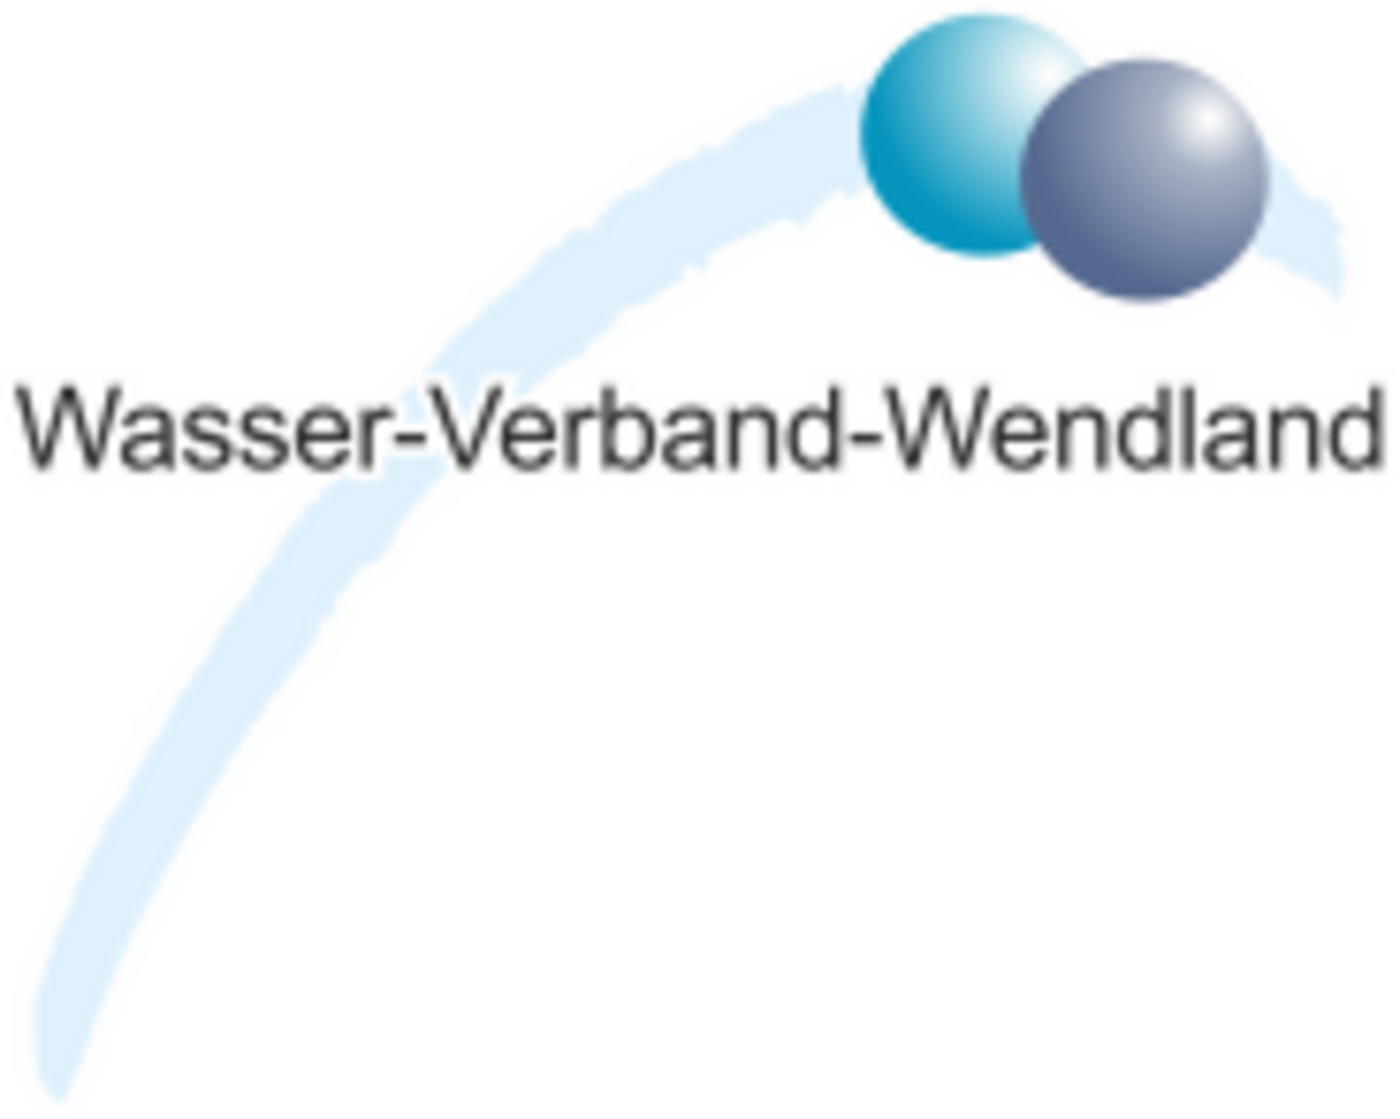 WasserVerband-Wendland Logo